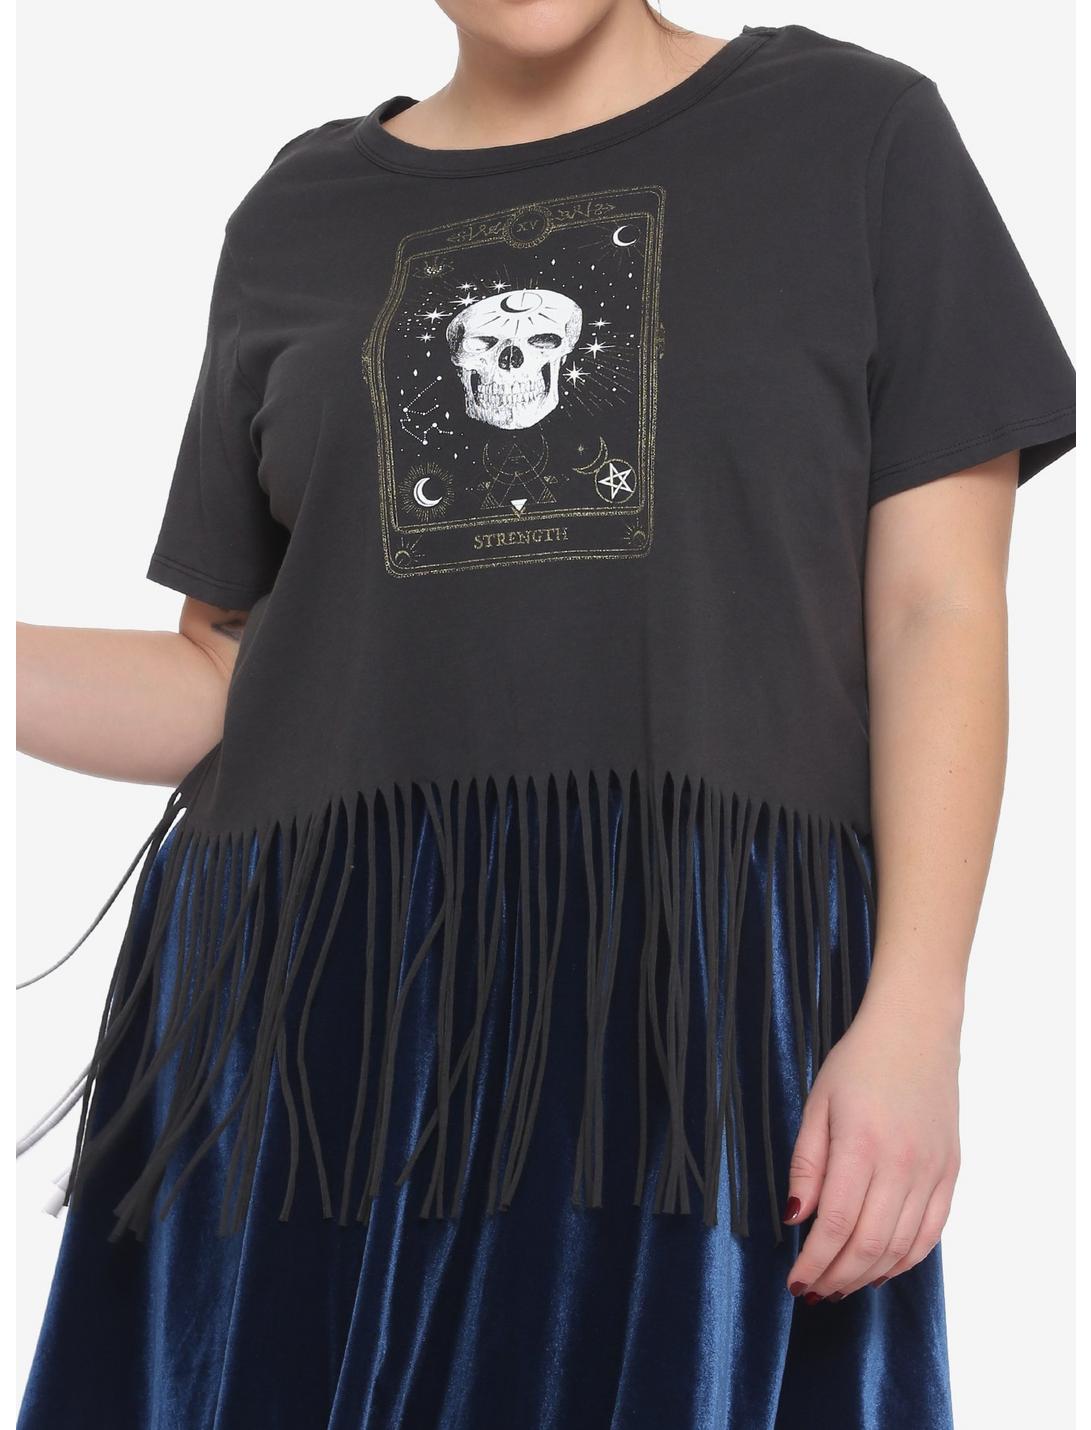 Skull Tarot Card Fringe Girls Crop T-Shirt Plus Size, BLACK, hi-res